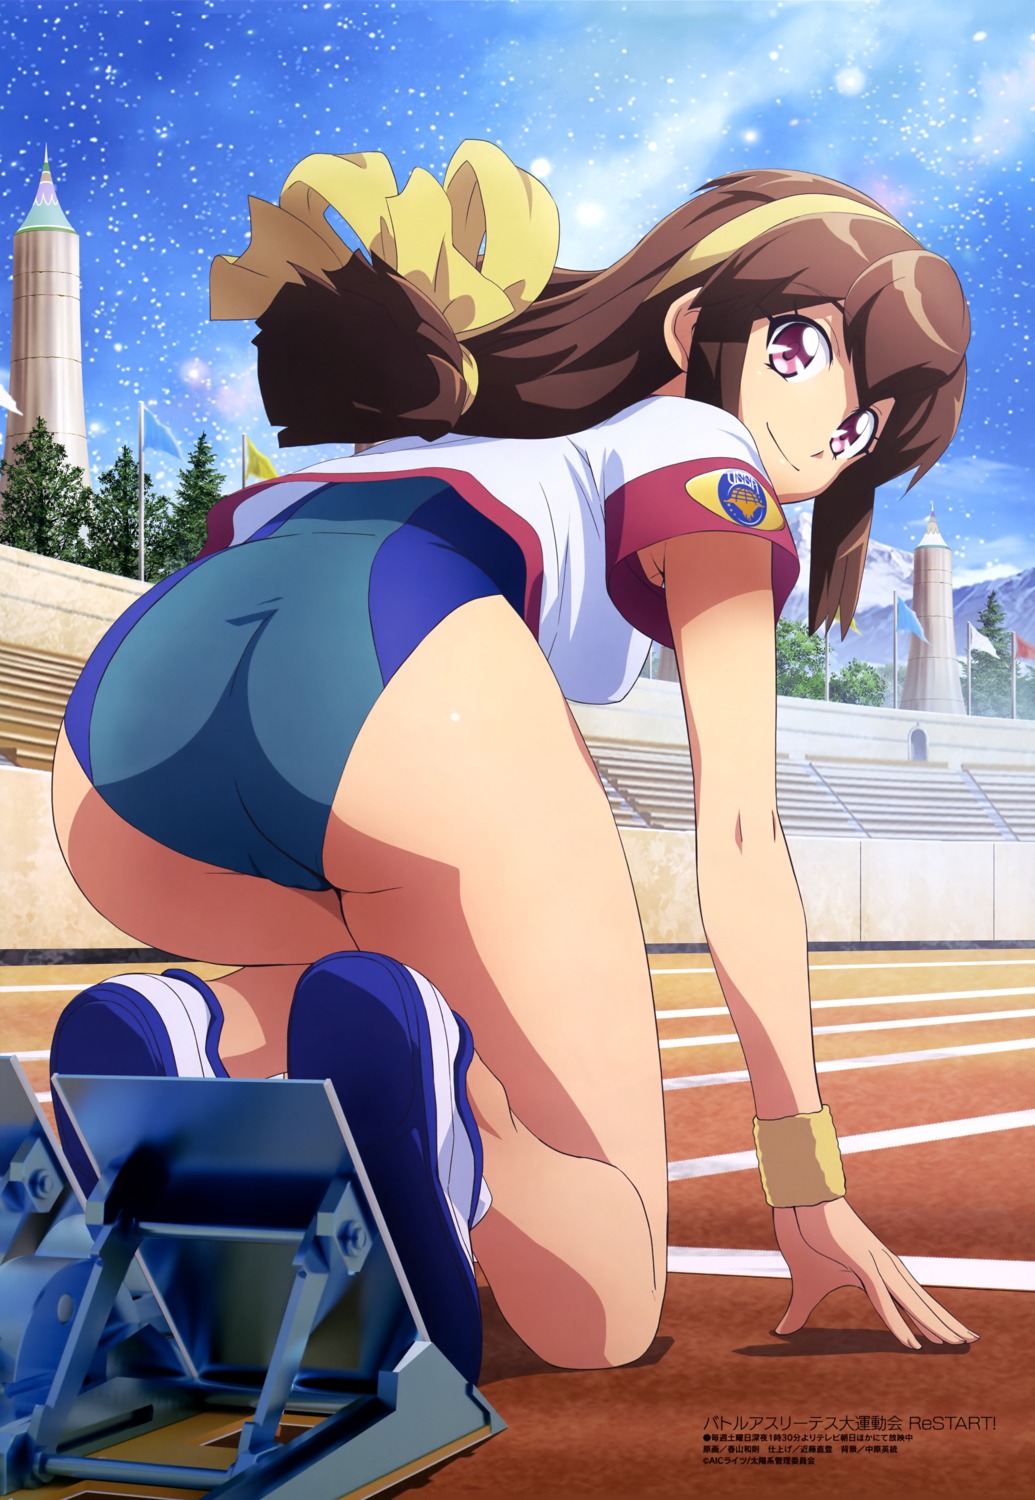 akehoshi_kanata ass battle_athletes battle_athletes_dai-undoukai_restart! gym_uniform haruyama_kazunori